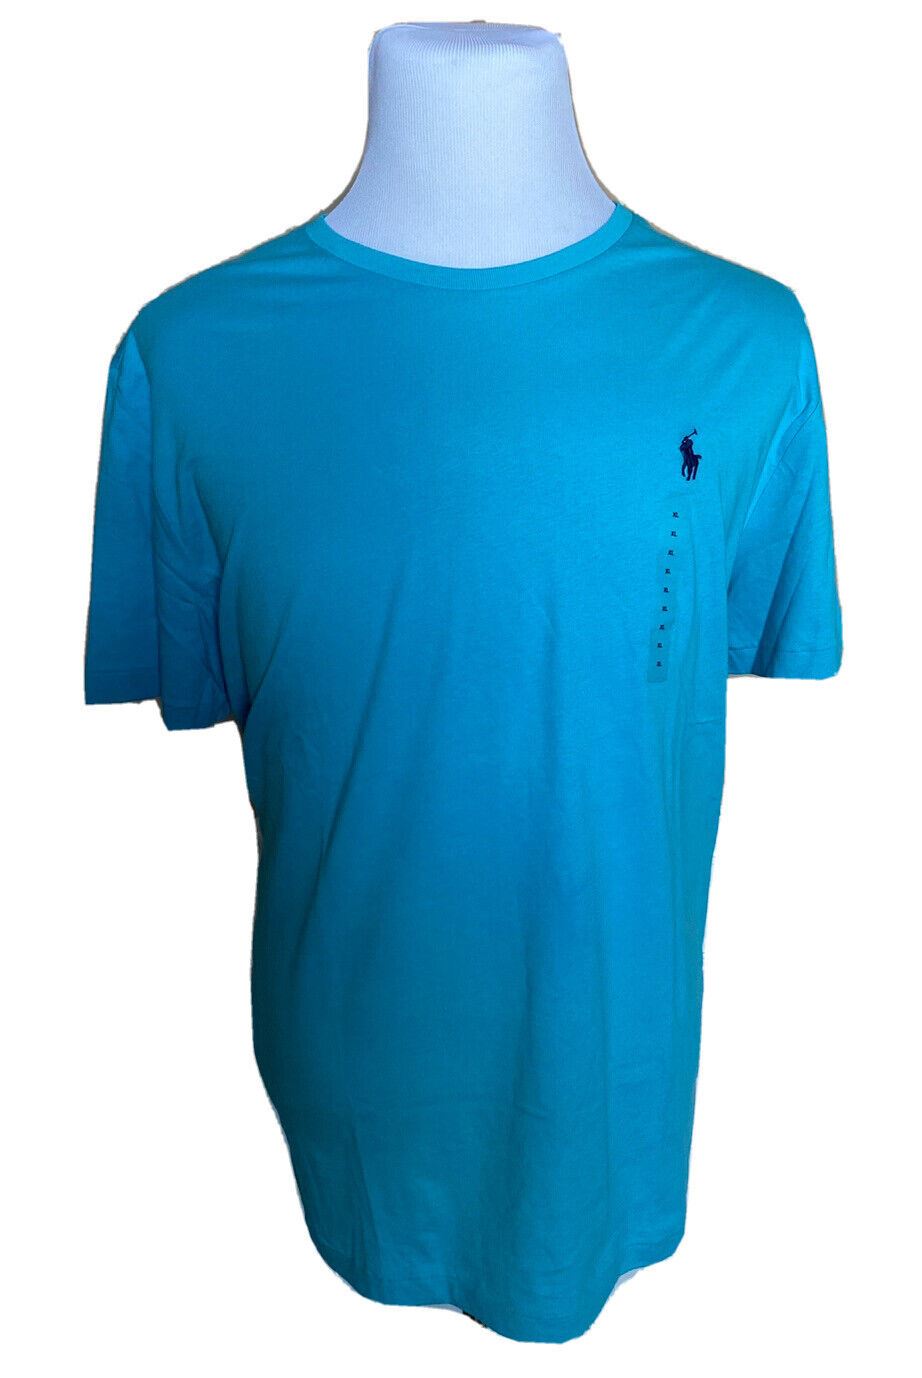 Neu mit Etikett: Polo Ralph Lauren Kurzarm-Baumwoll-T-Shirt, Blau, XL 